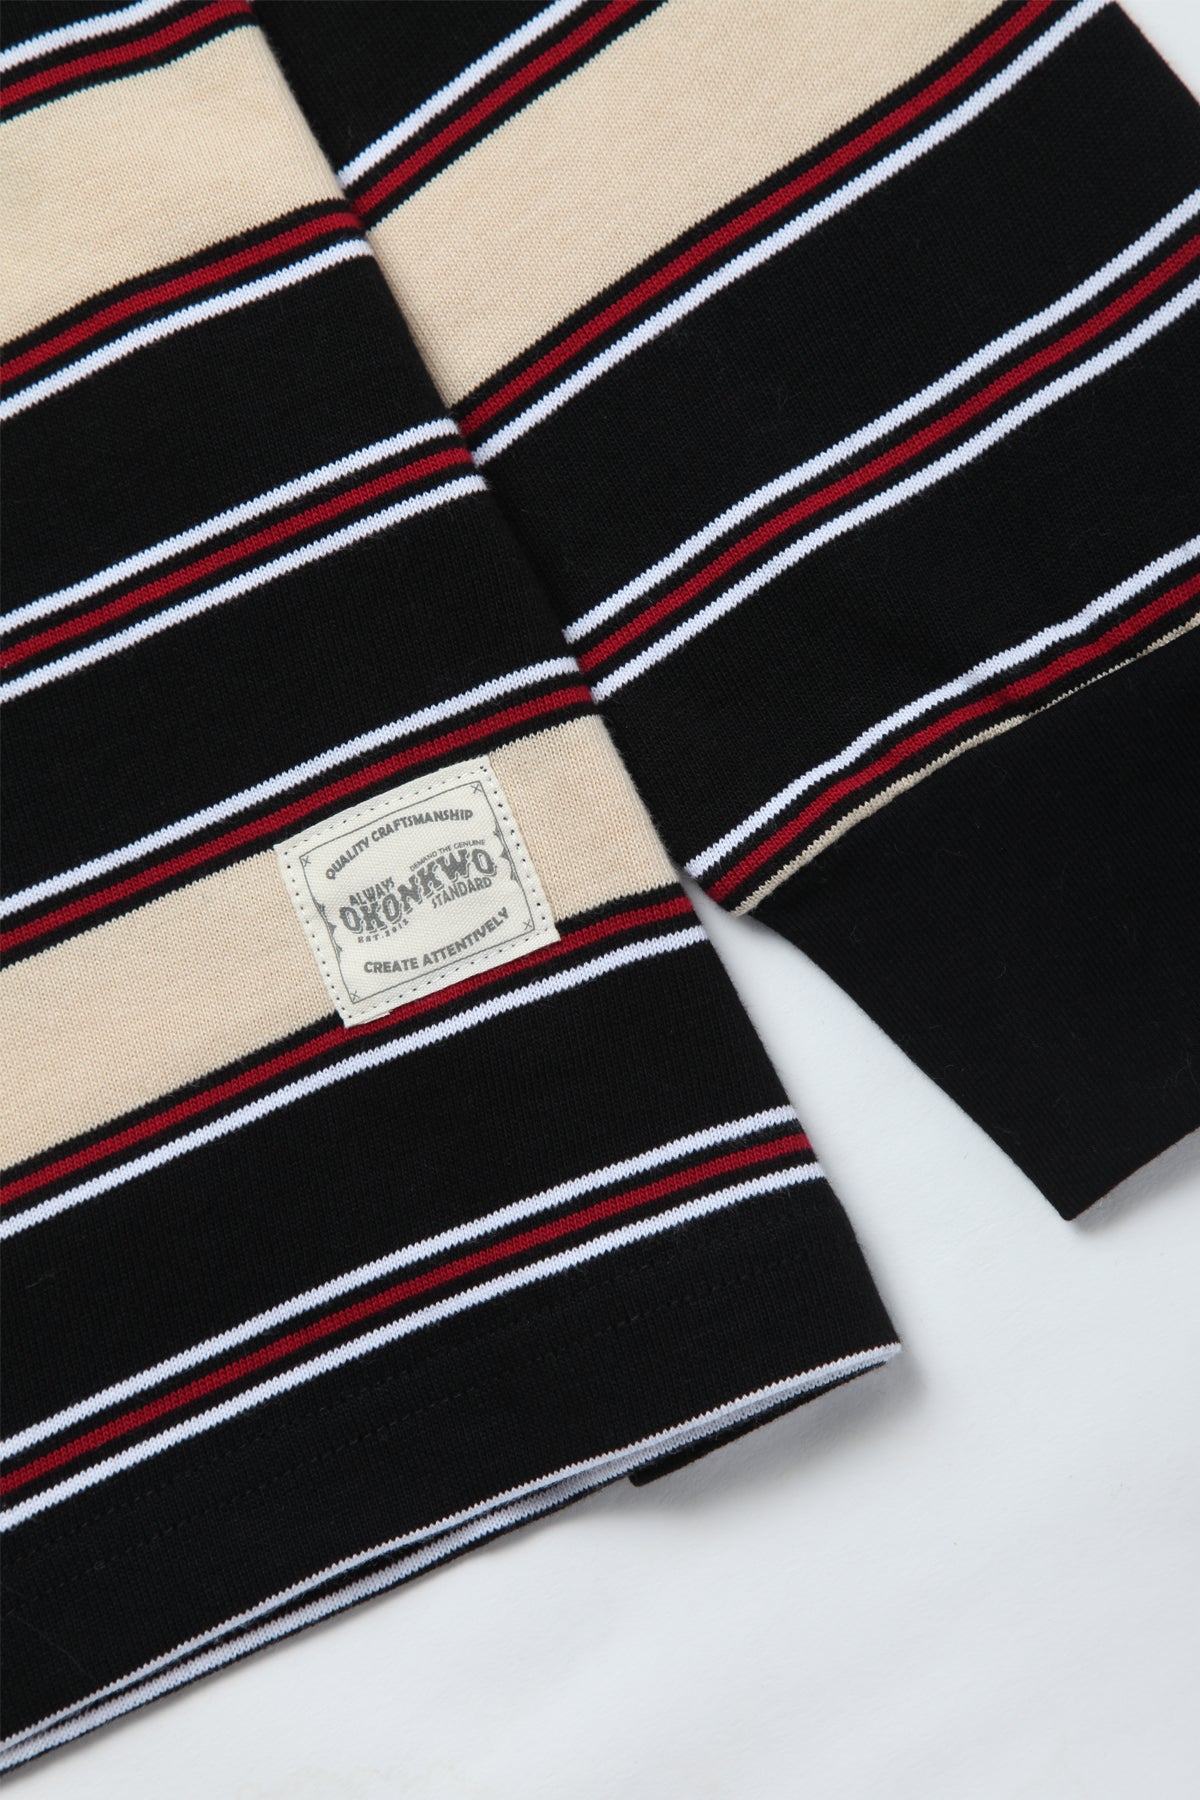 Okonkwo MFG - Long Sleeve Striped Tee - Black/Tan